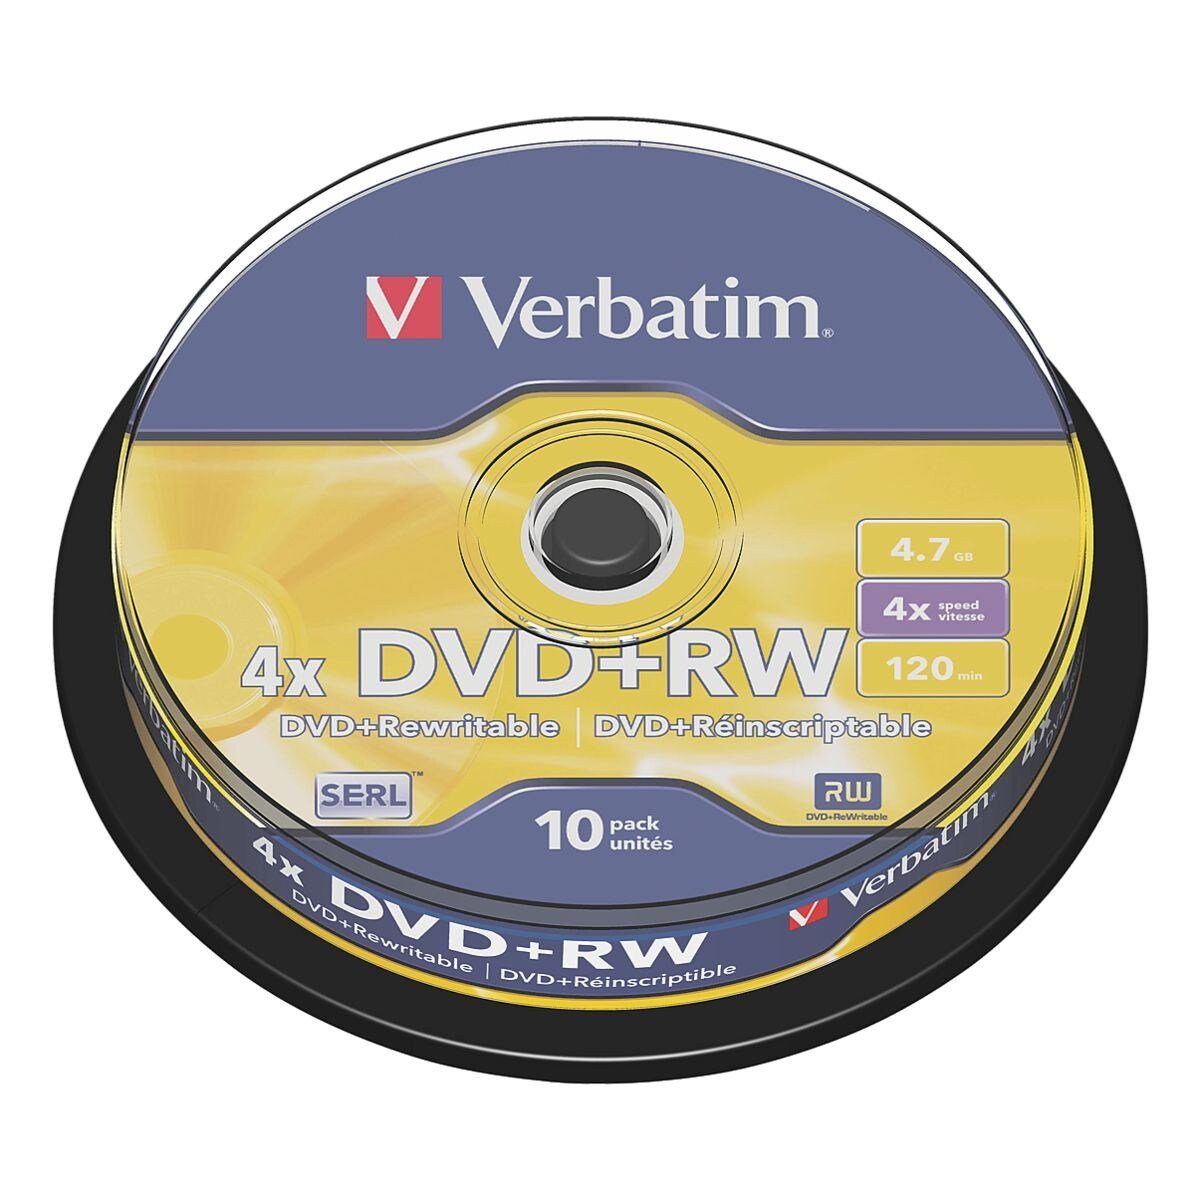 Verbatim DVD-Rohling DVD+RW, 4,7 GB, mehrfach beschreibbar